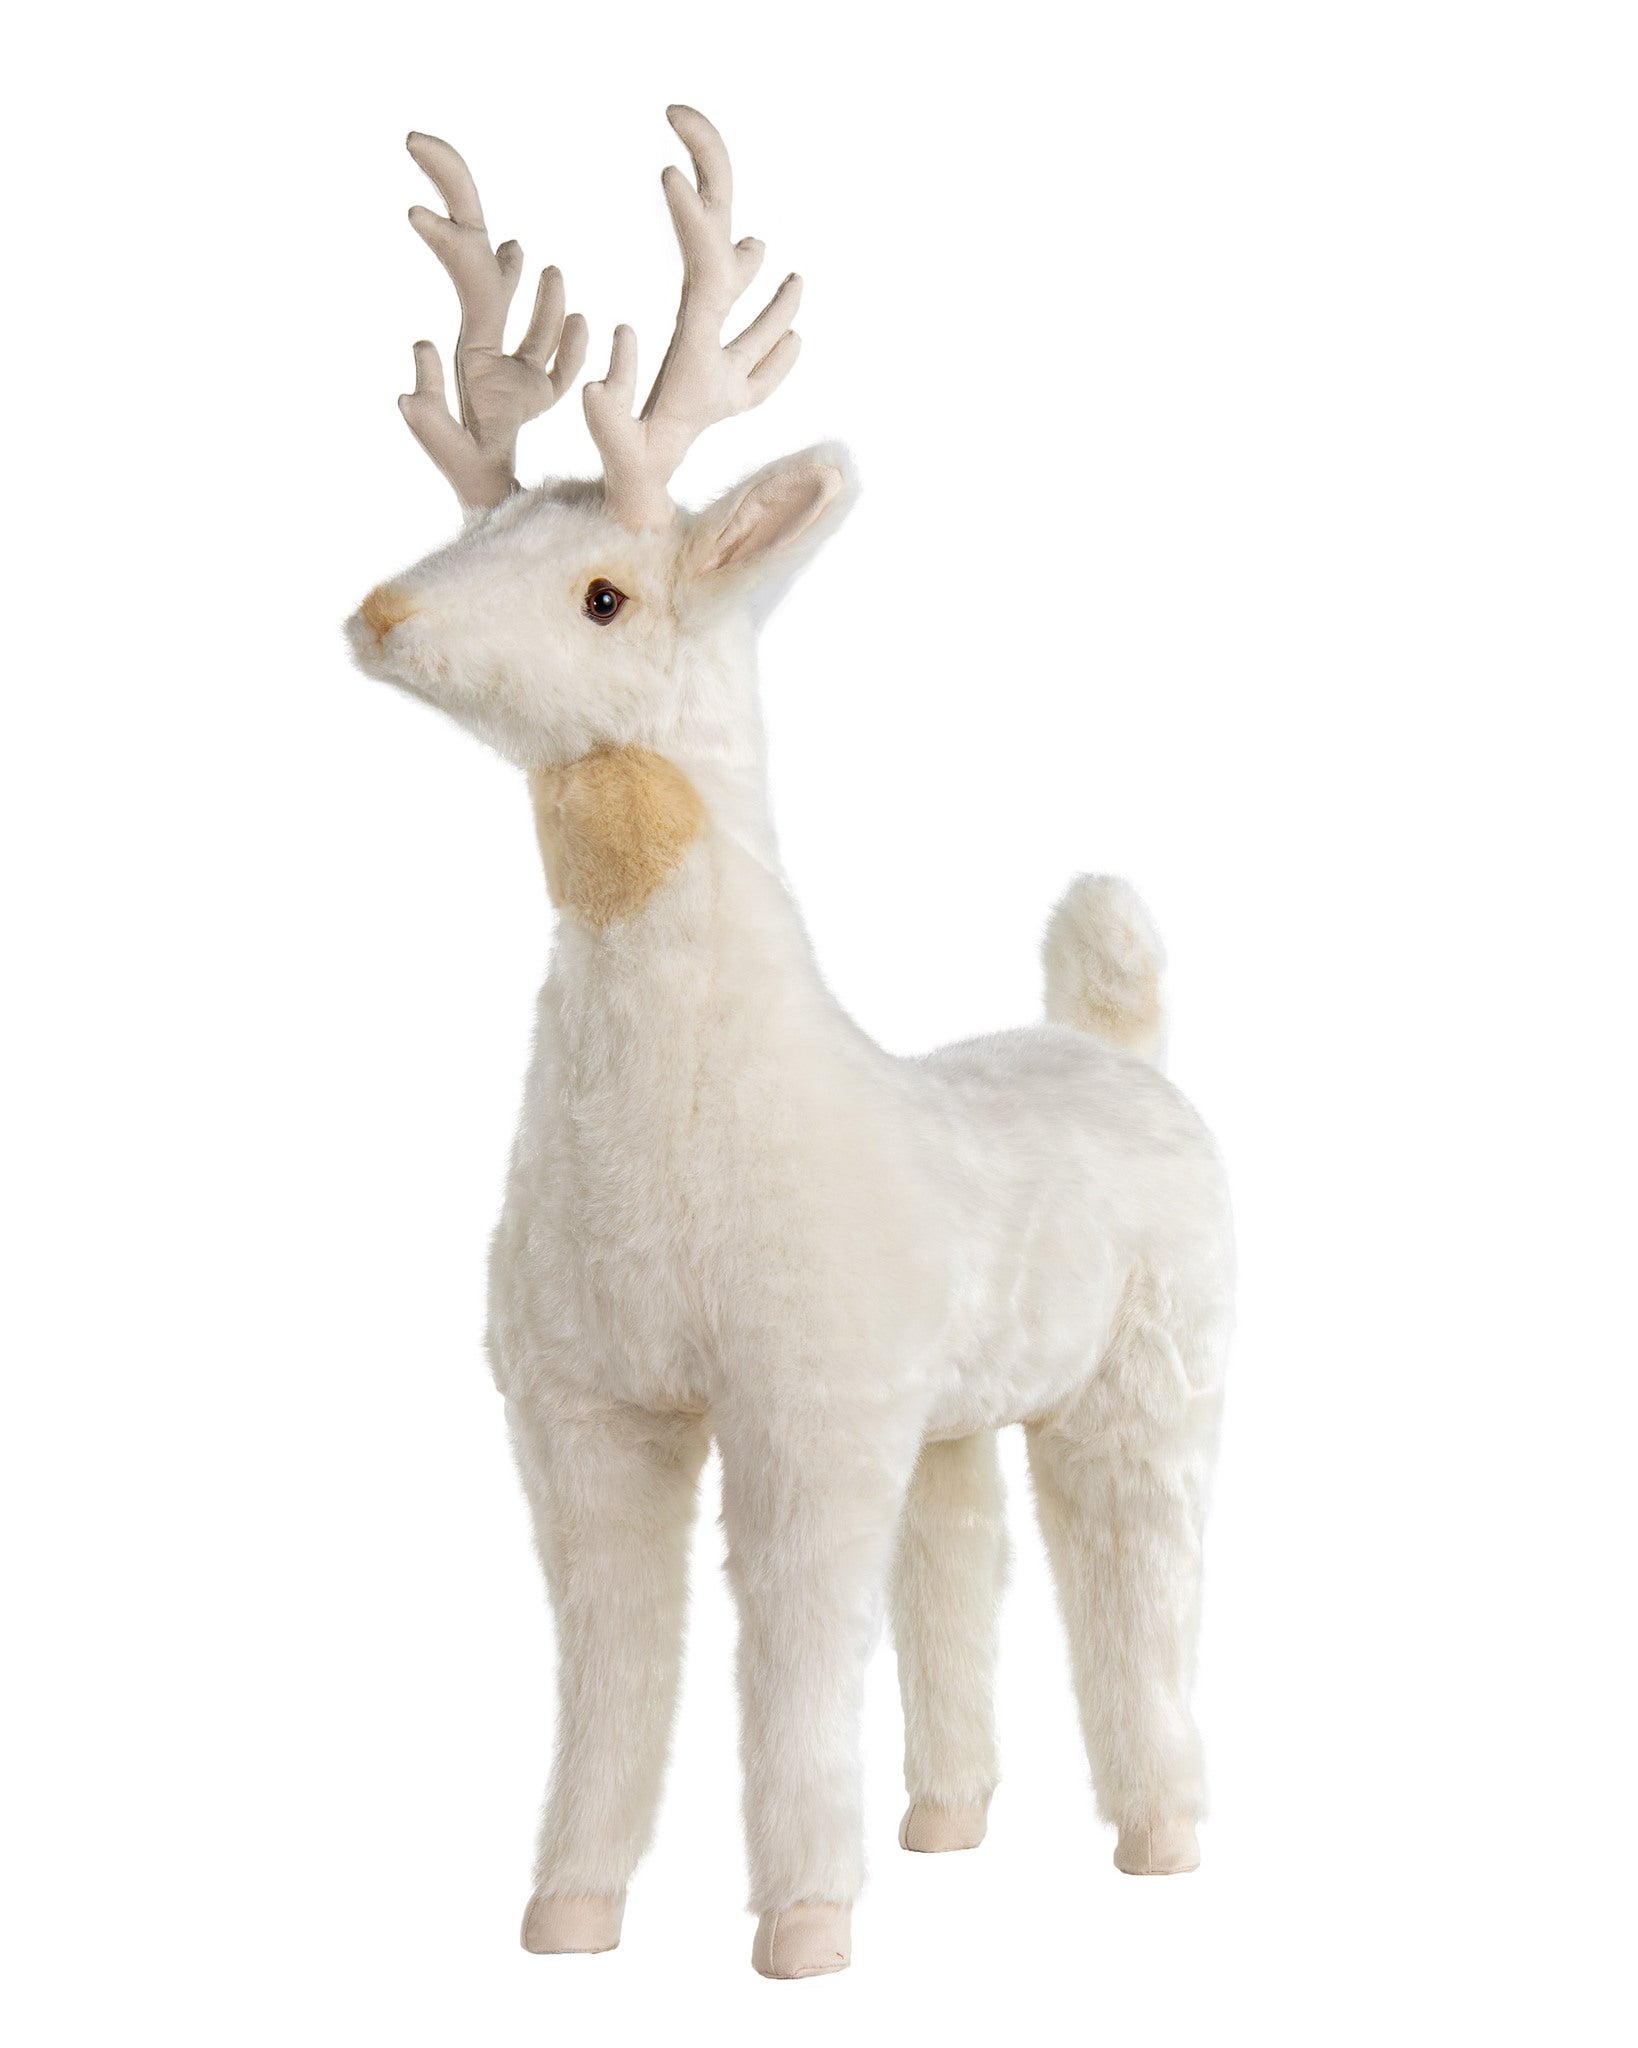 Footrest Animals - Reindeer | Ditz Designs by The Hen House